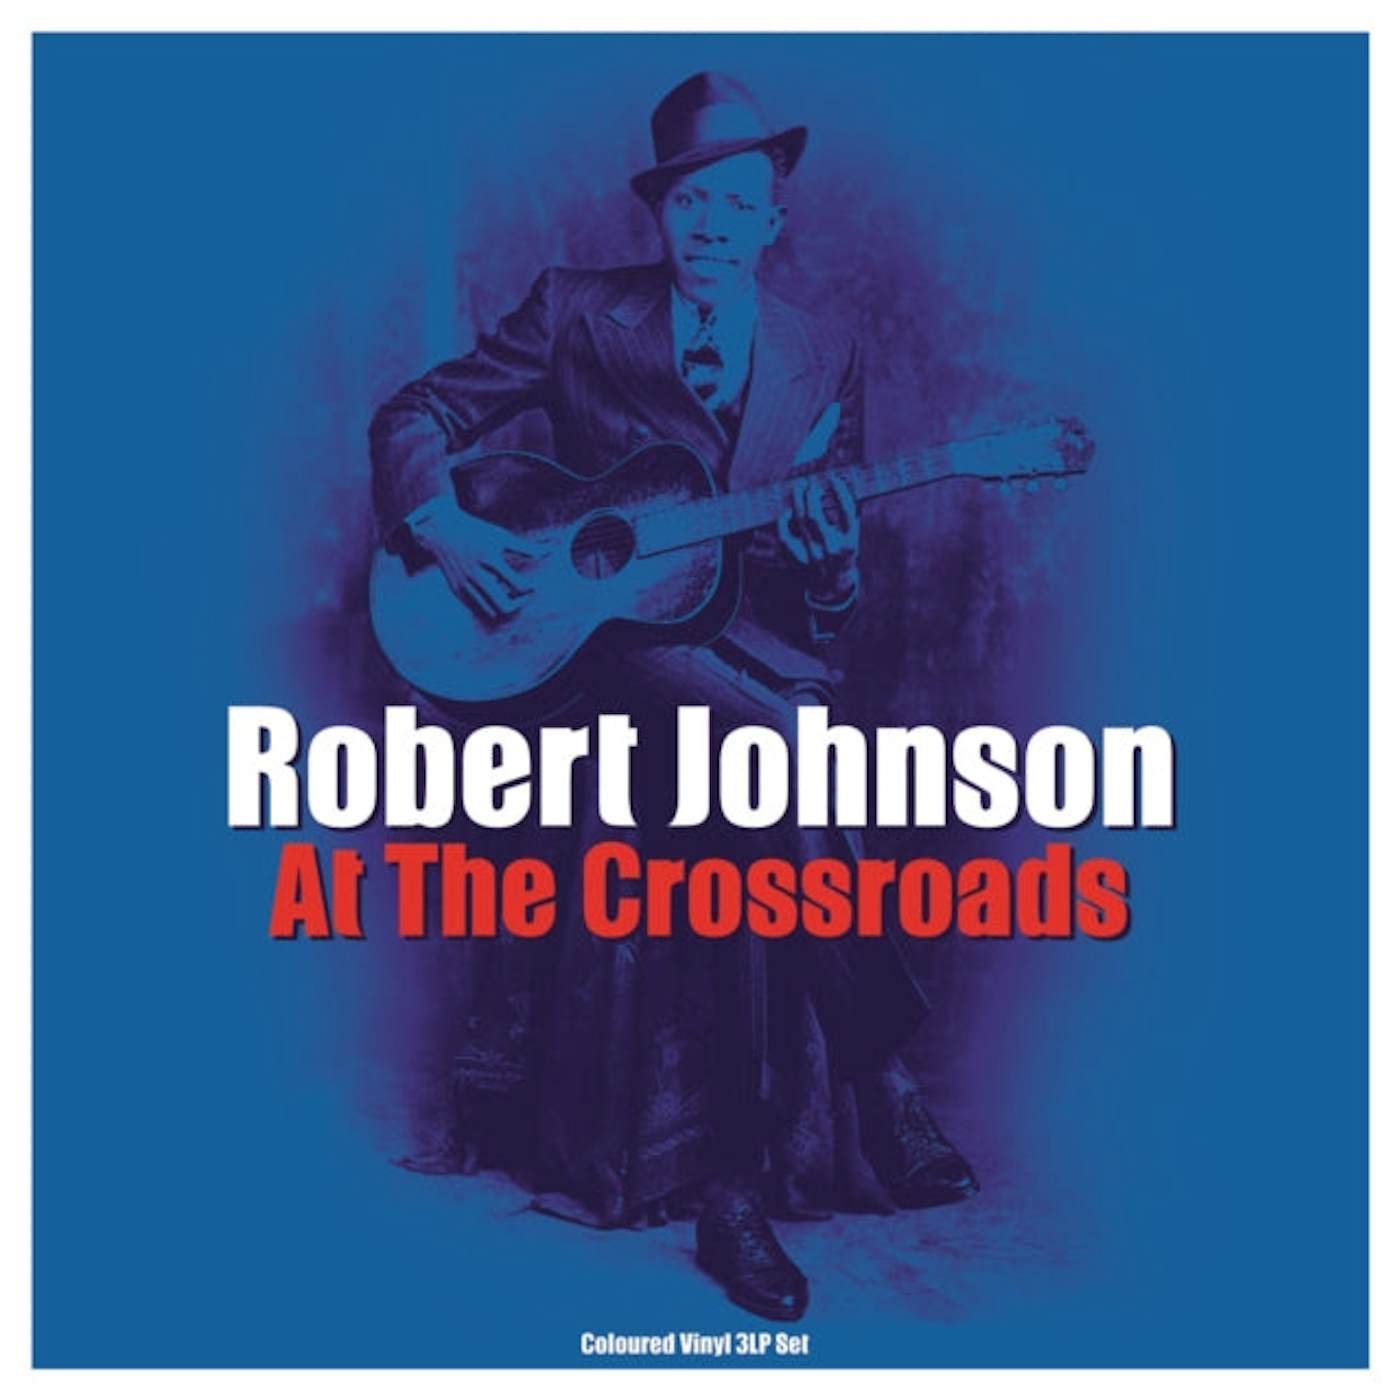 Robert Johnson LP - Cross Road Blues (Transparent Vinyl)